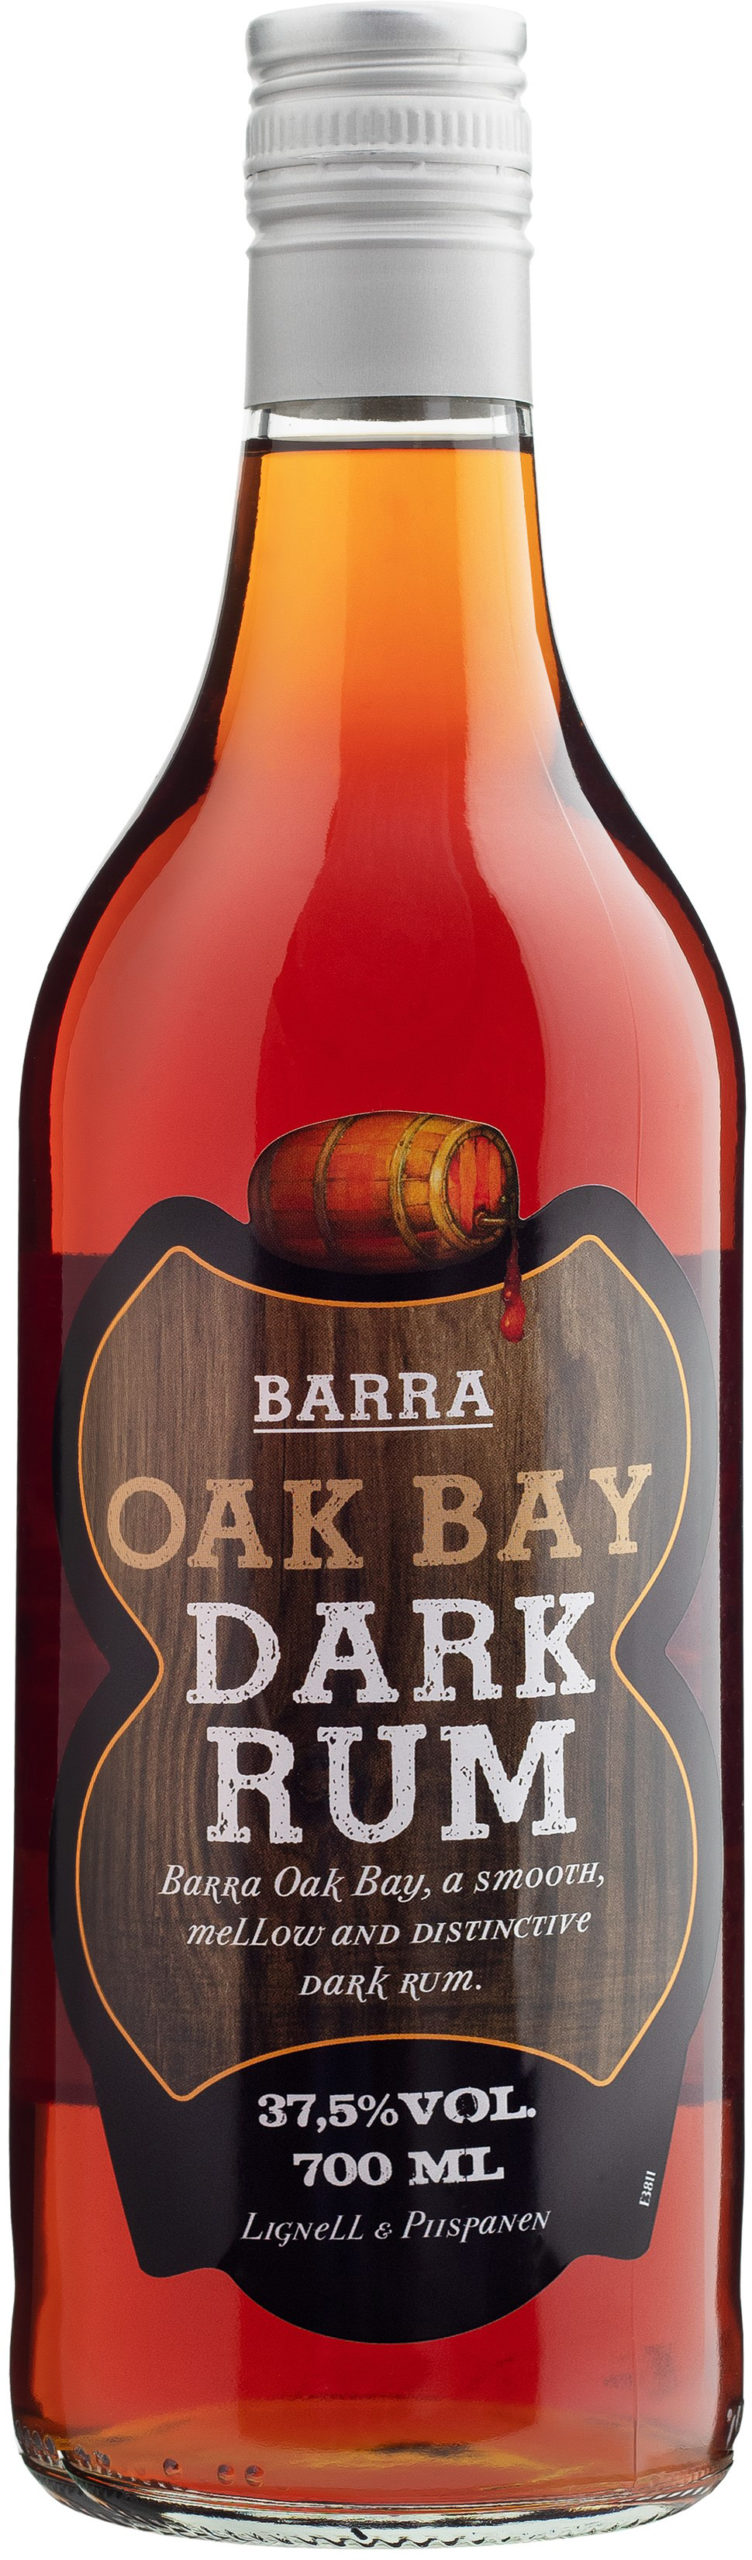 Barra Oak Bay Dark